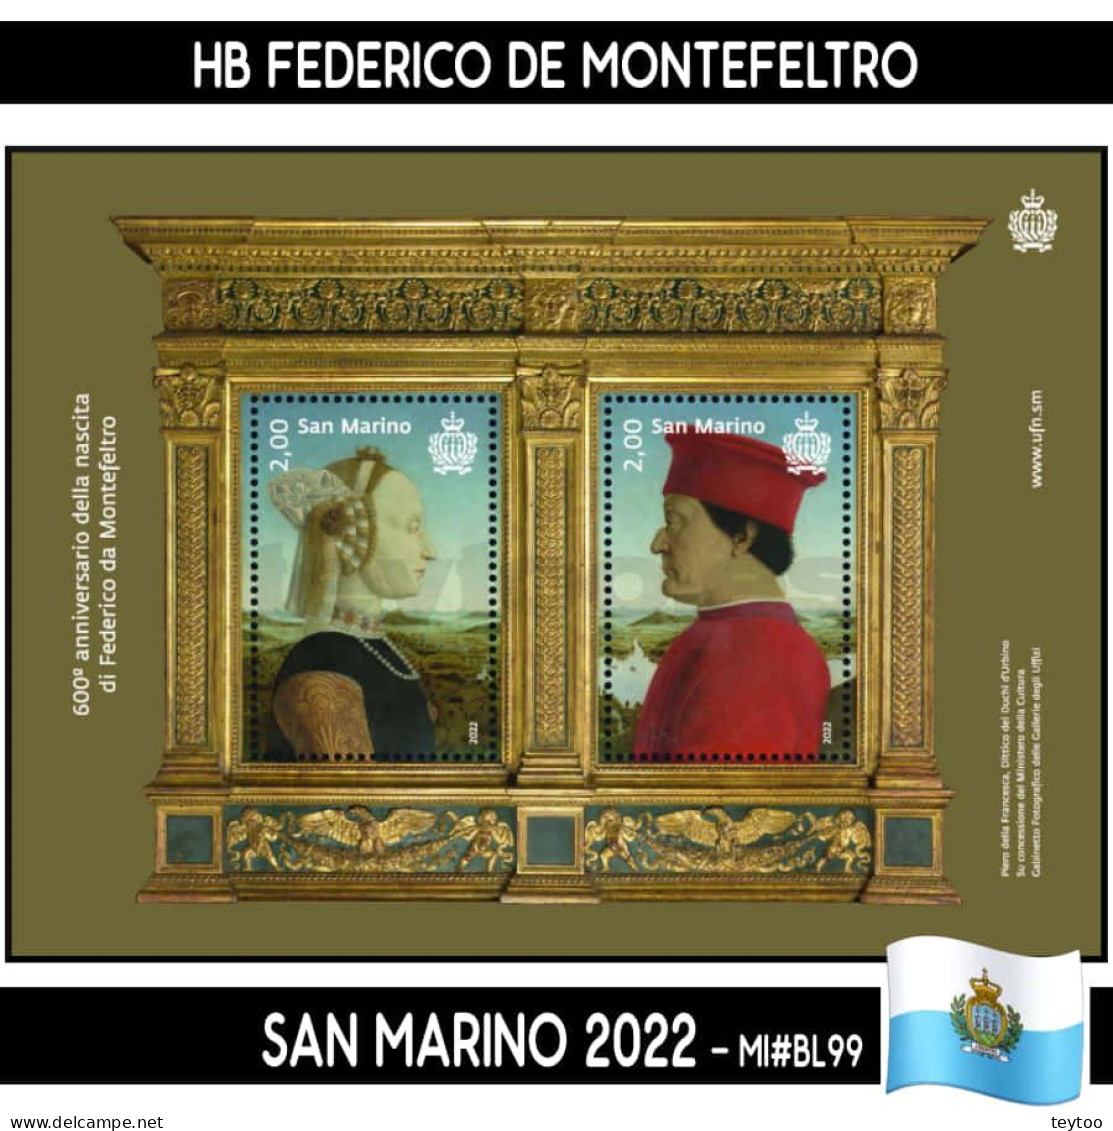 B0933# San Marino 2022. HB Federico De Montefeltro (MNH) MI#BL99 - Unused Stamps